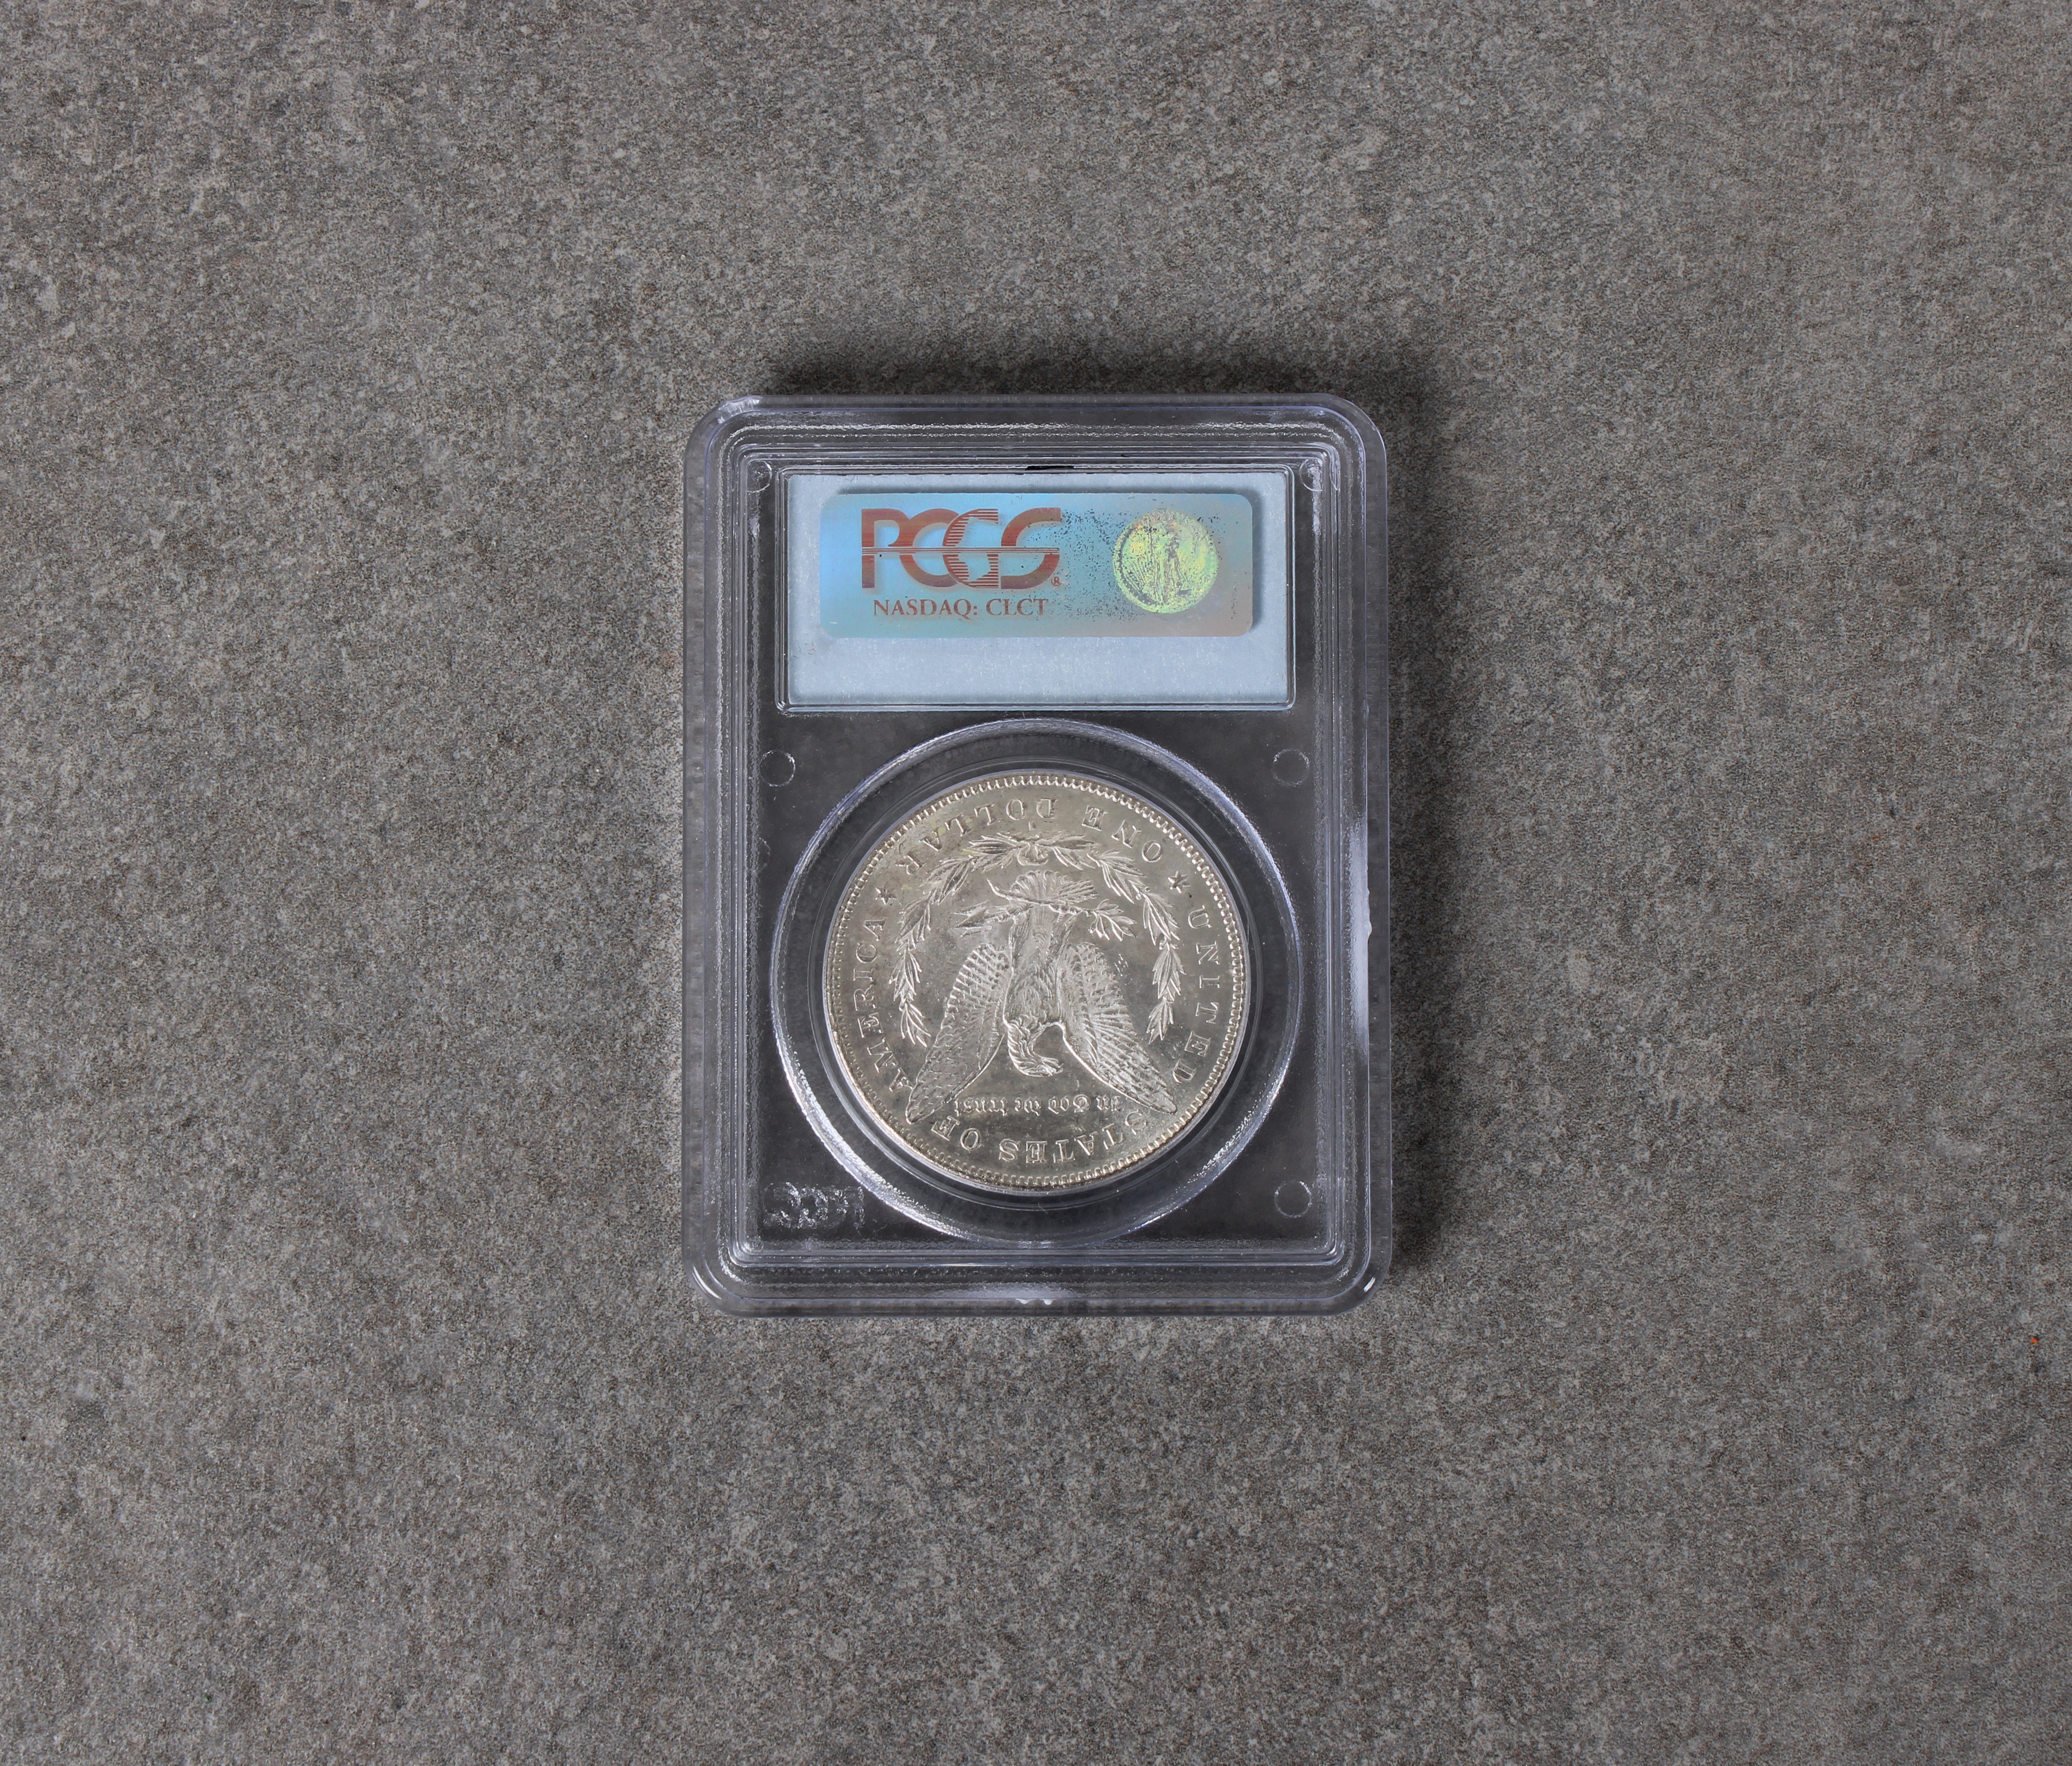 An 1878-S Morgan Dollar - PCGS graded - Image 2 of 2